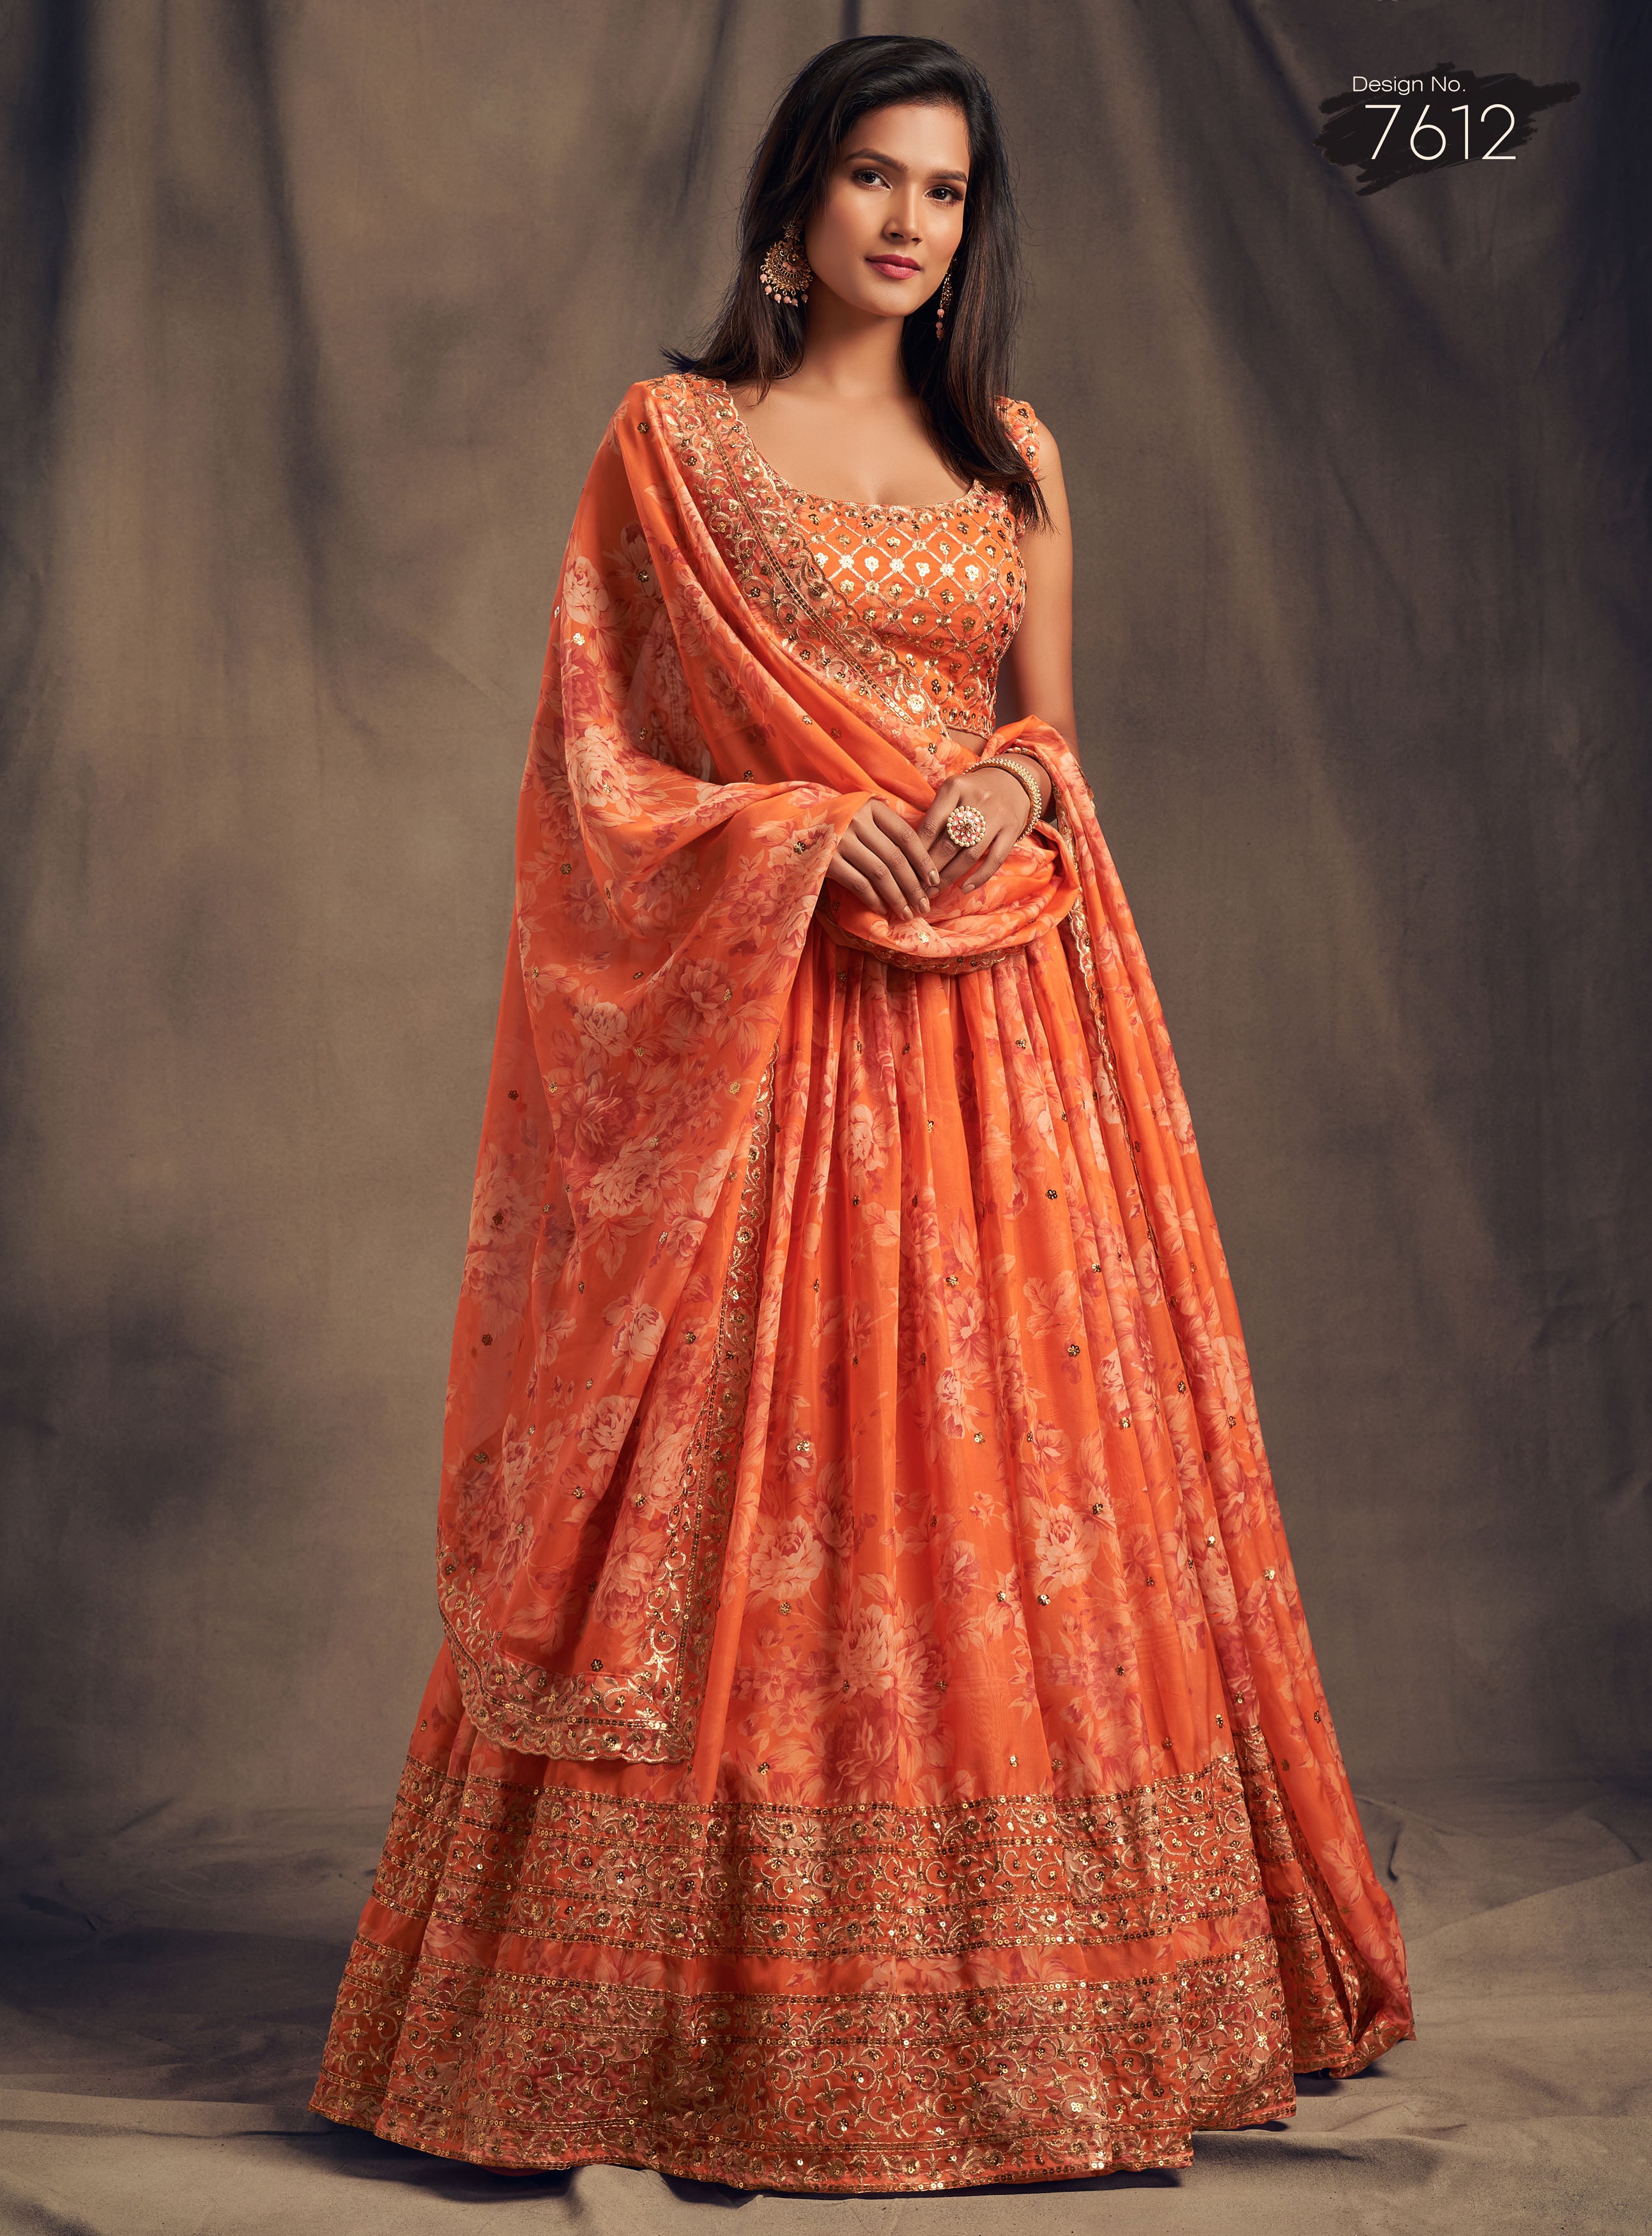 Wedding Machine New Party Wear Designer Lehenga Choli at Rs 3850 in Surat